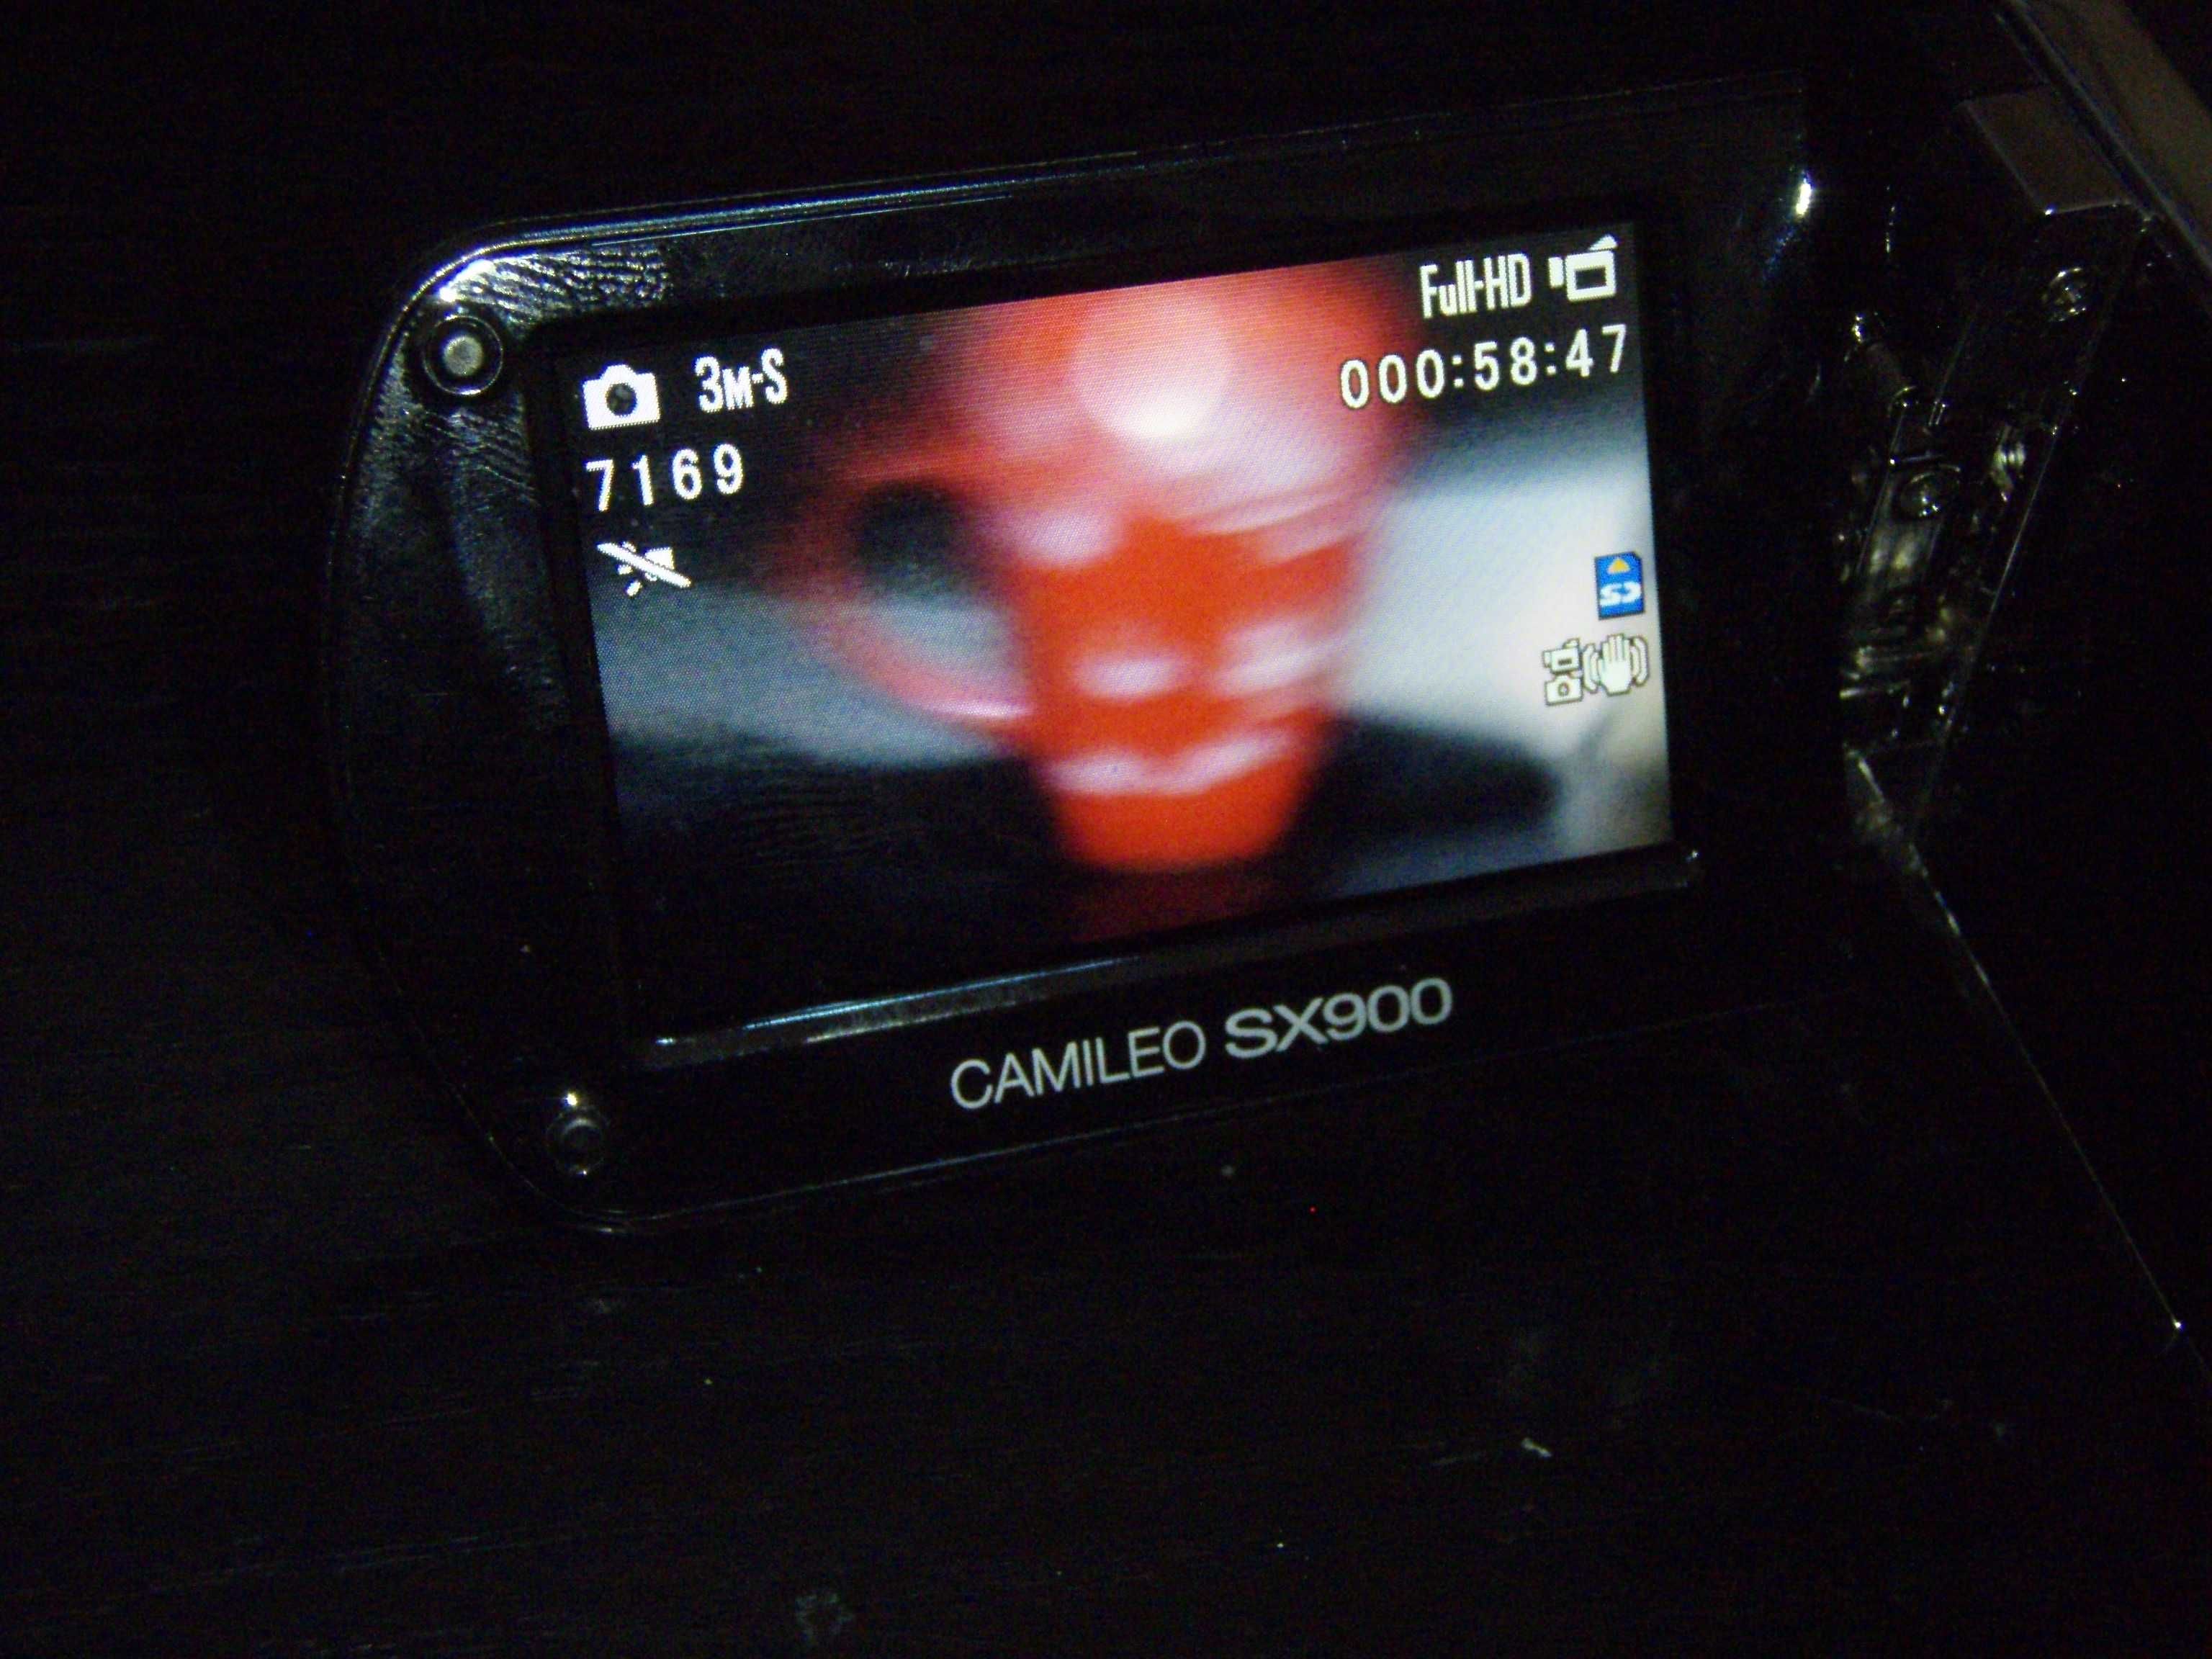 Camera video Toshiba Camileo SX900, nu focalizeaza